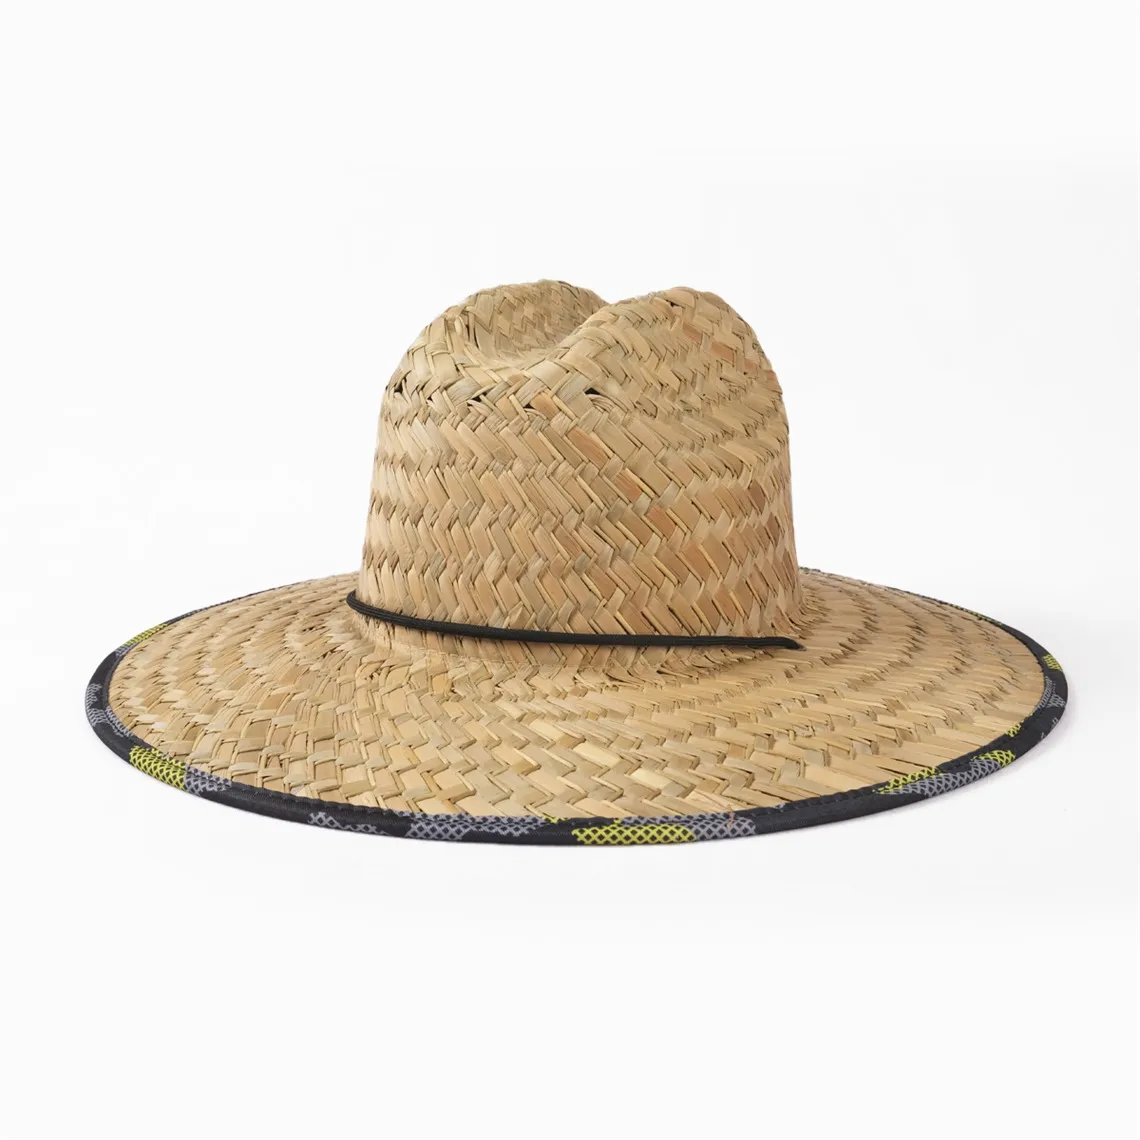 bulrush and mat grass lifeguard straw hat